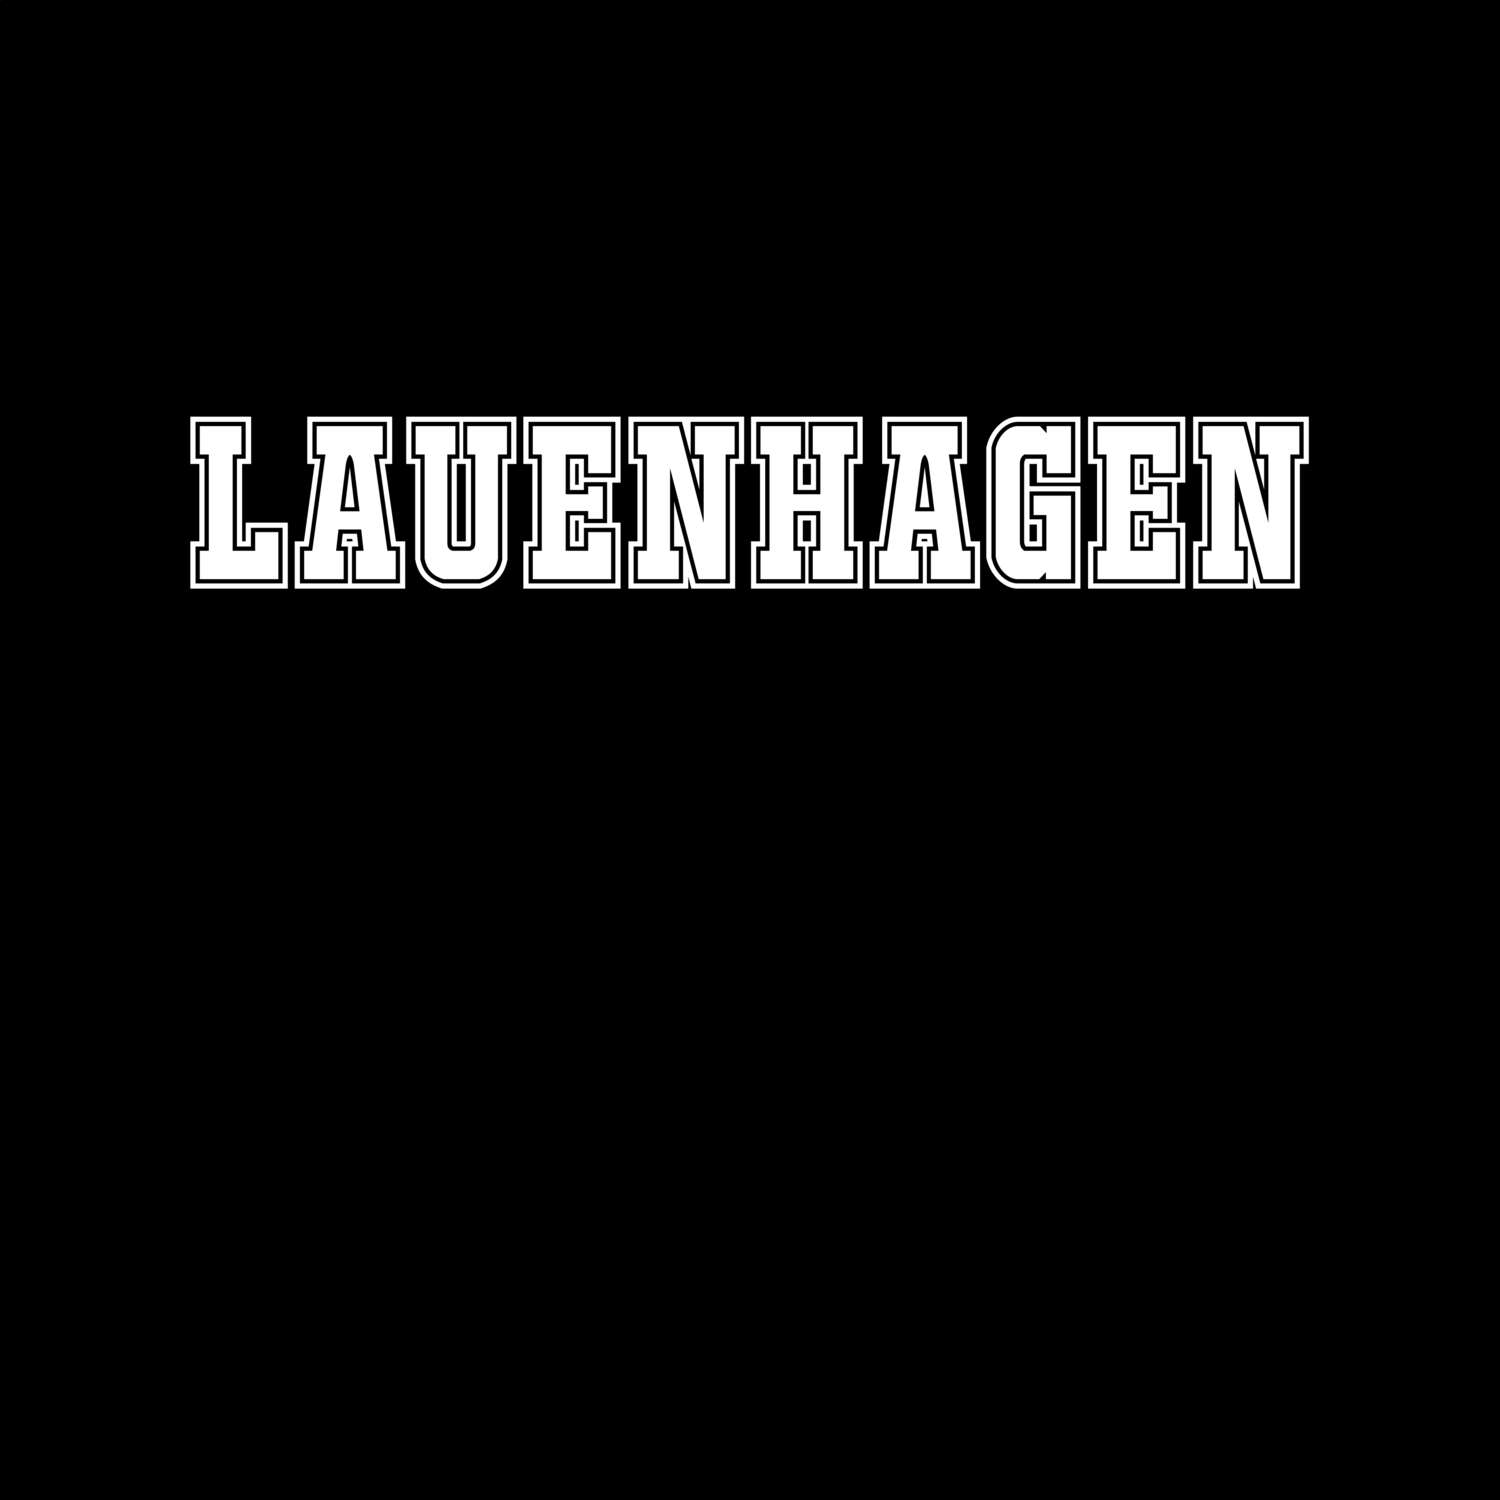 Lauenhagen T-Shirt »Classic«